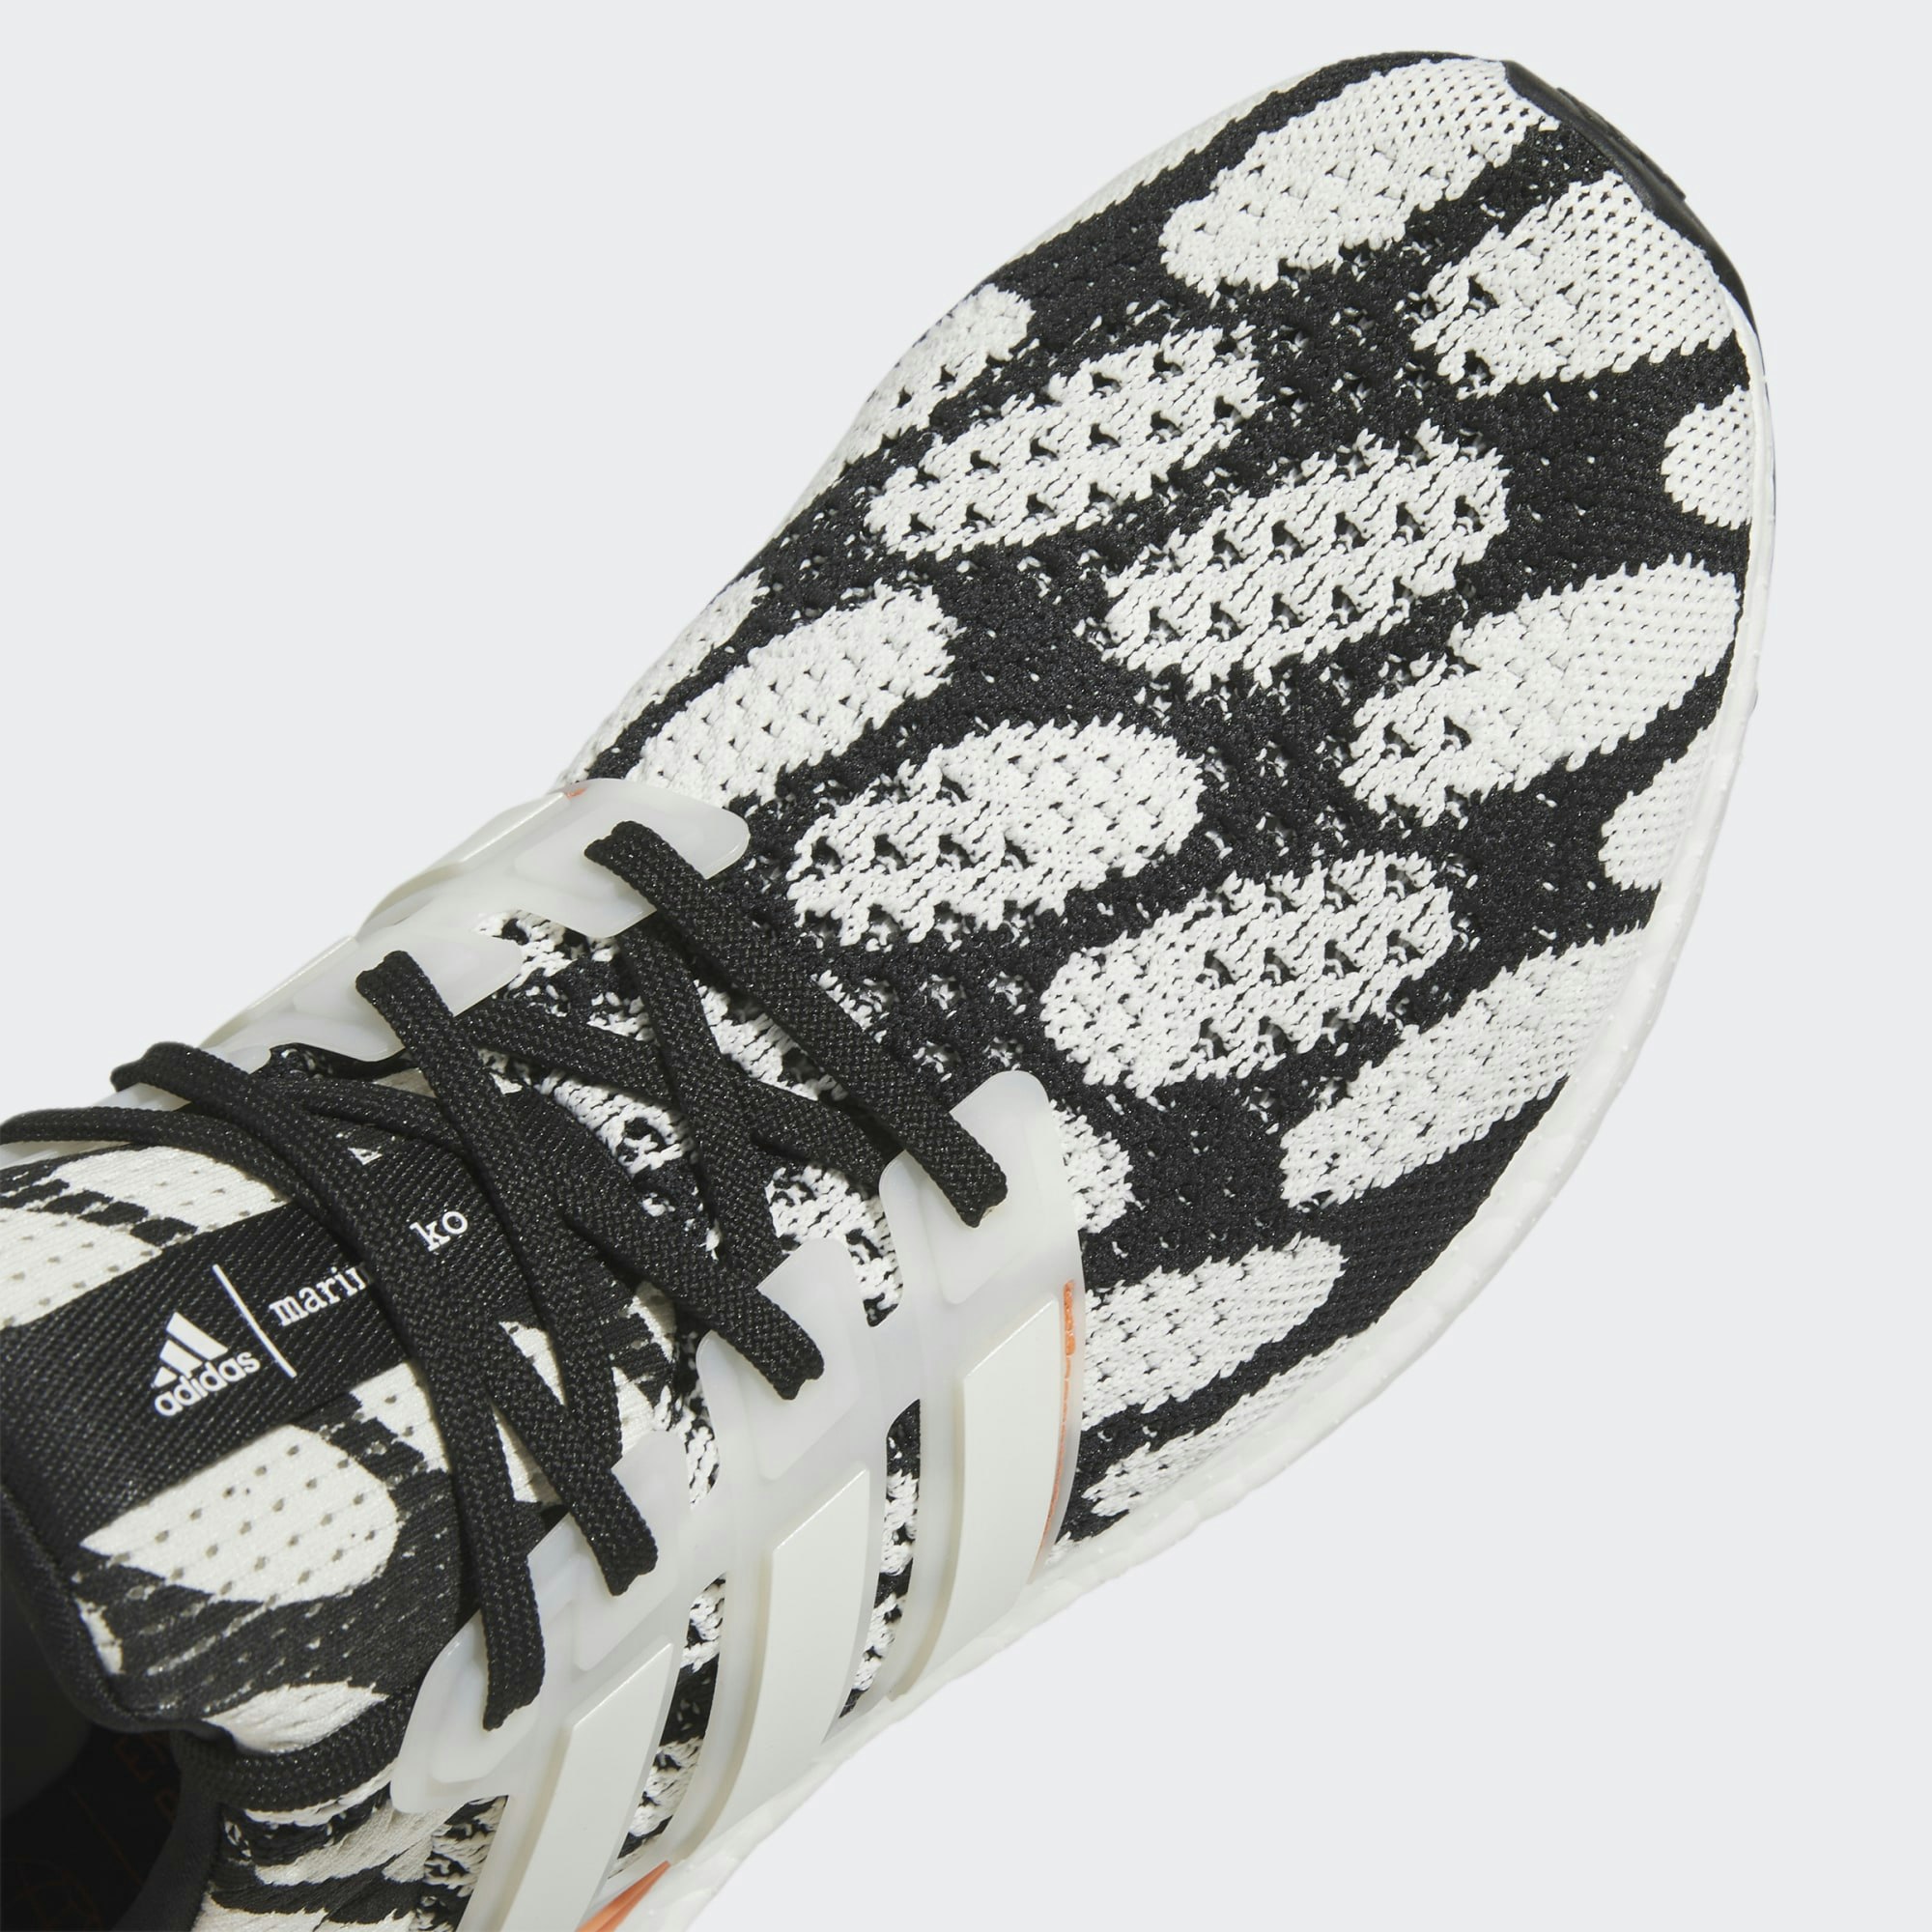 Marimekko x adidas Ultra Boost 1.0 "Semi Coral"